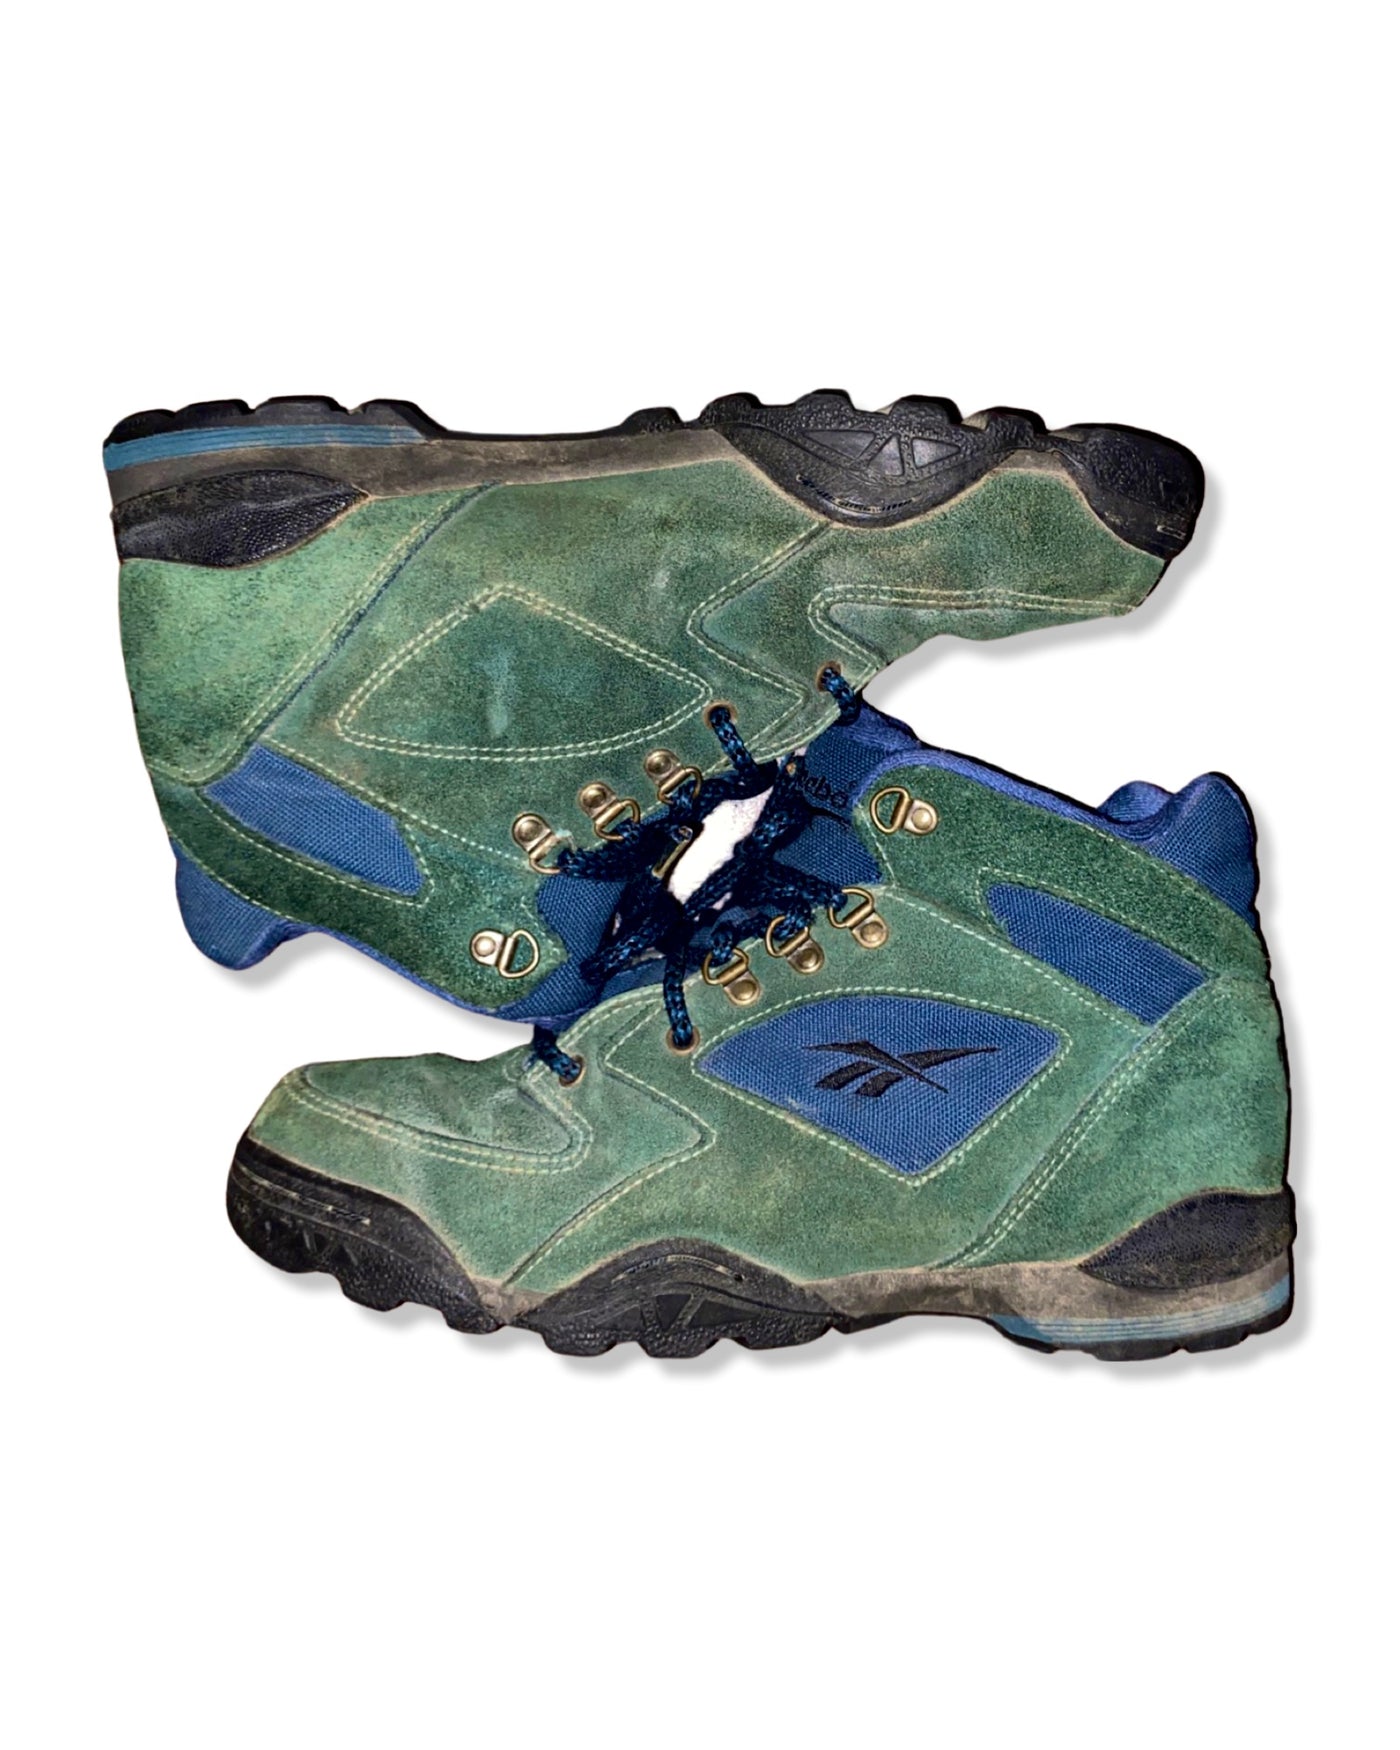 Vintage 1992 Reebok Hiking Boots